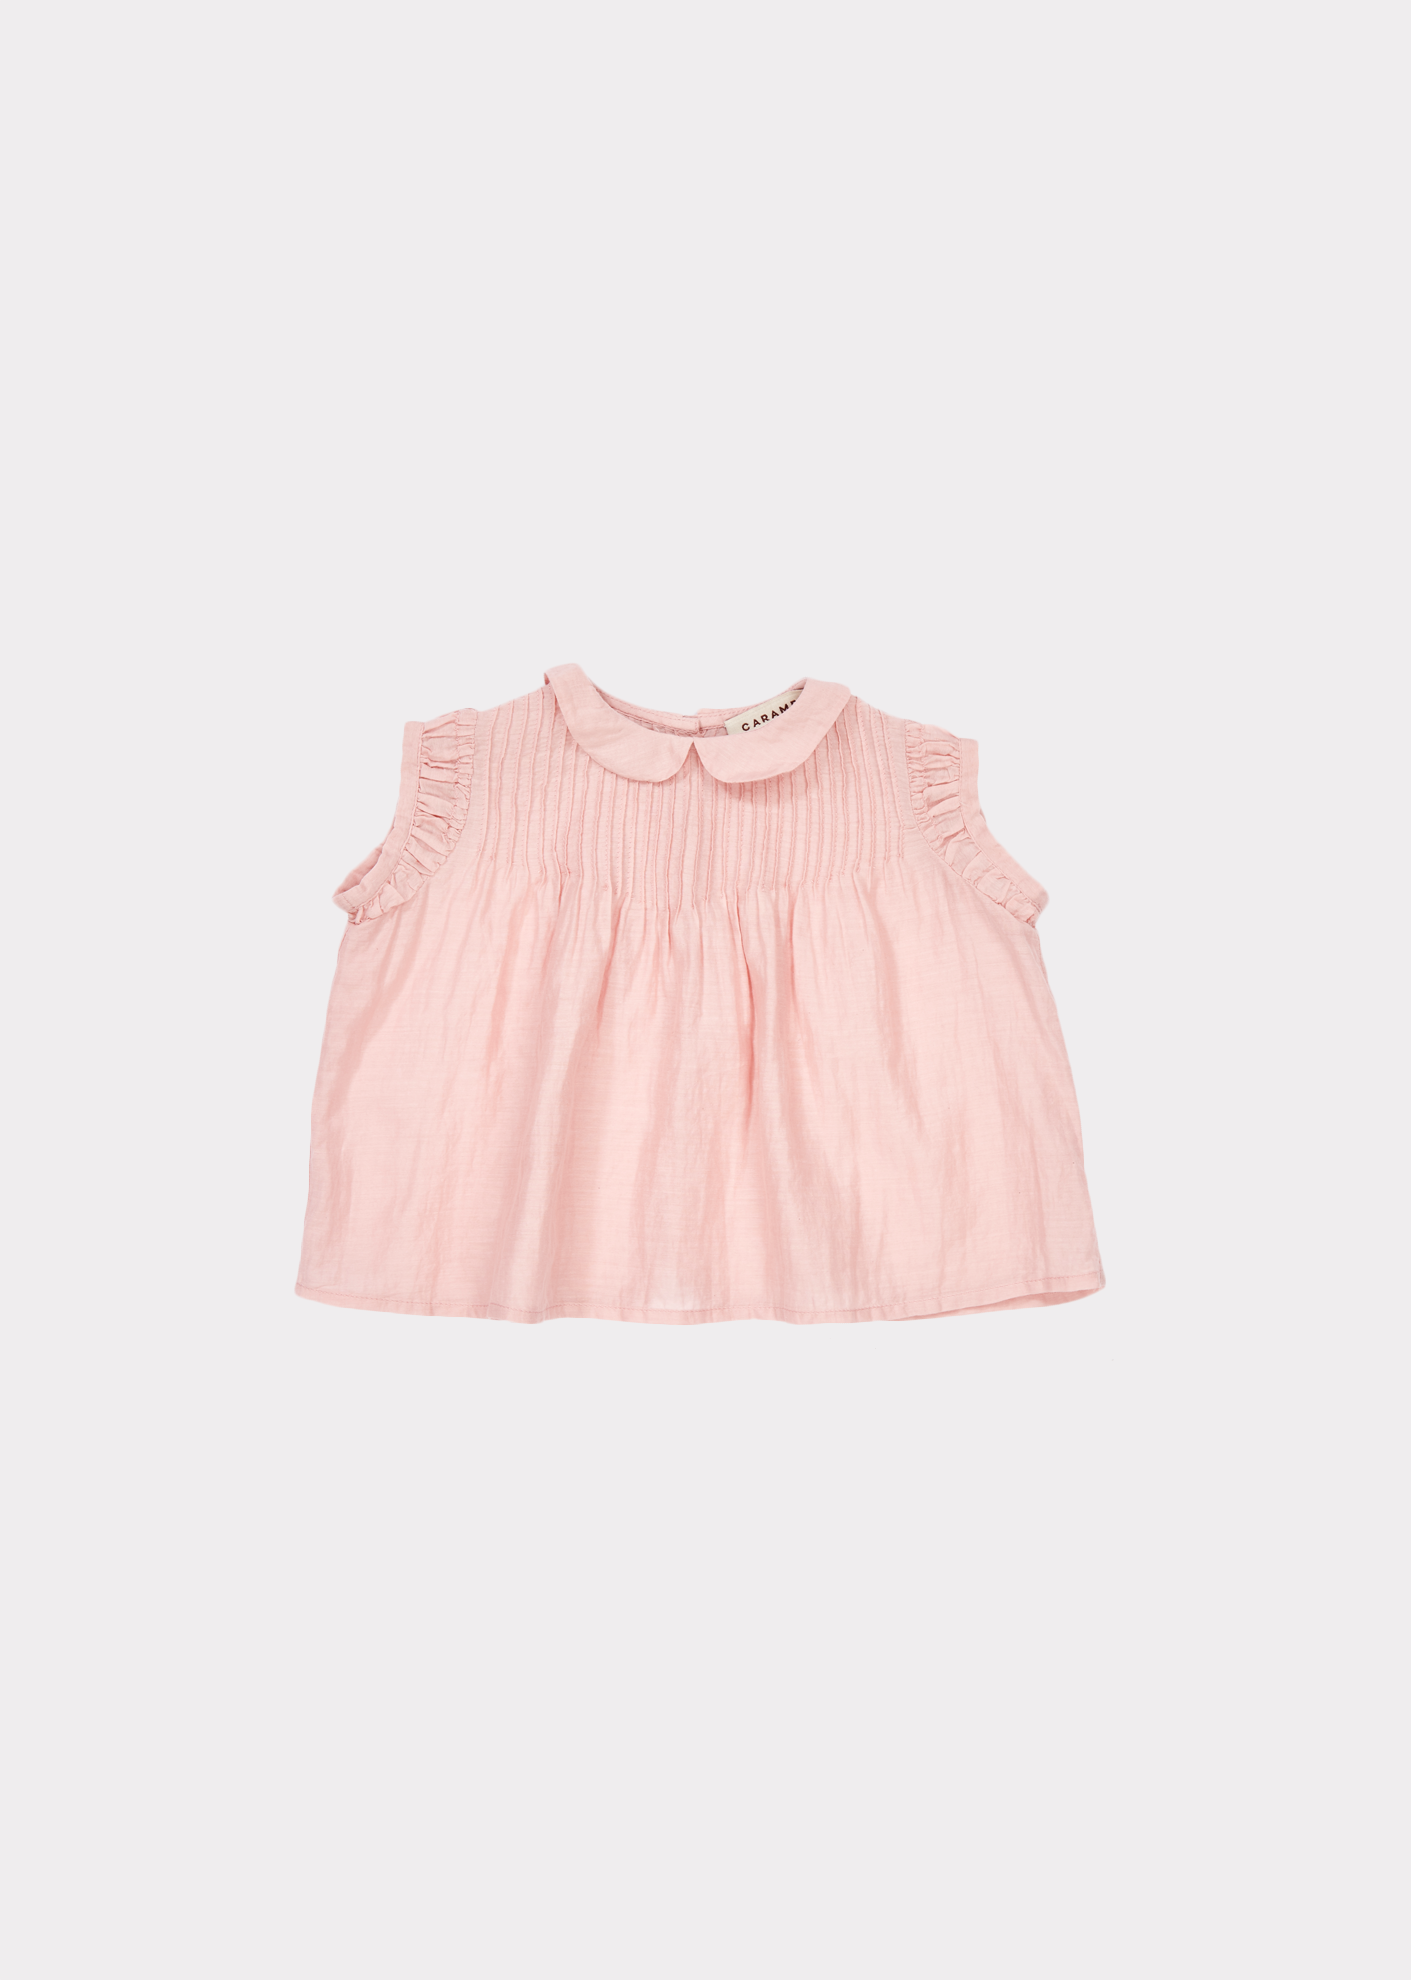 Baby Girls Pink Cotton Top